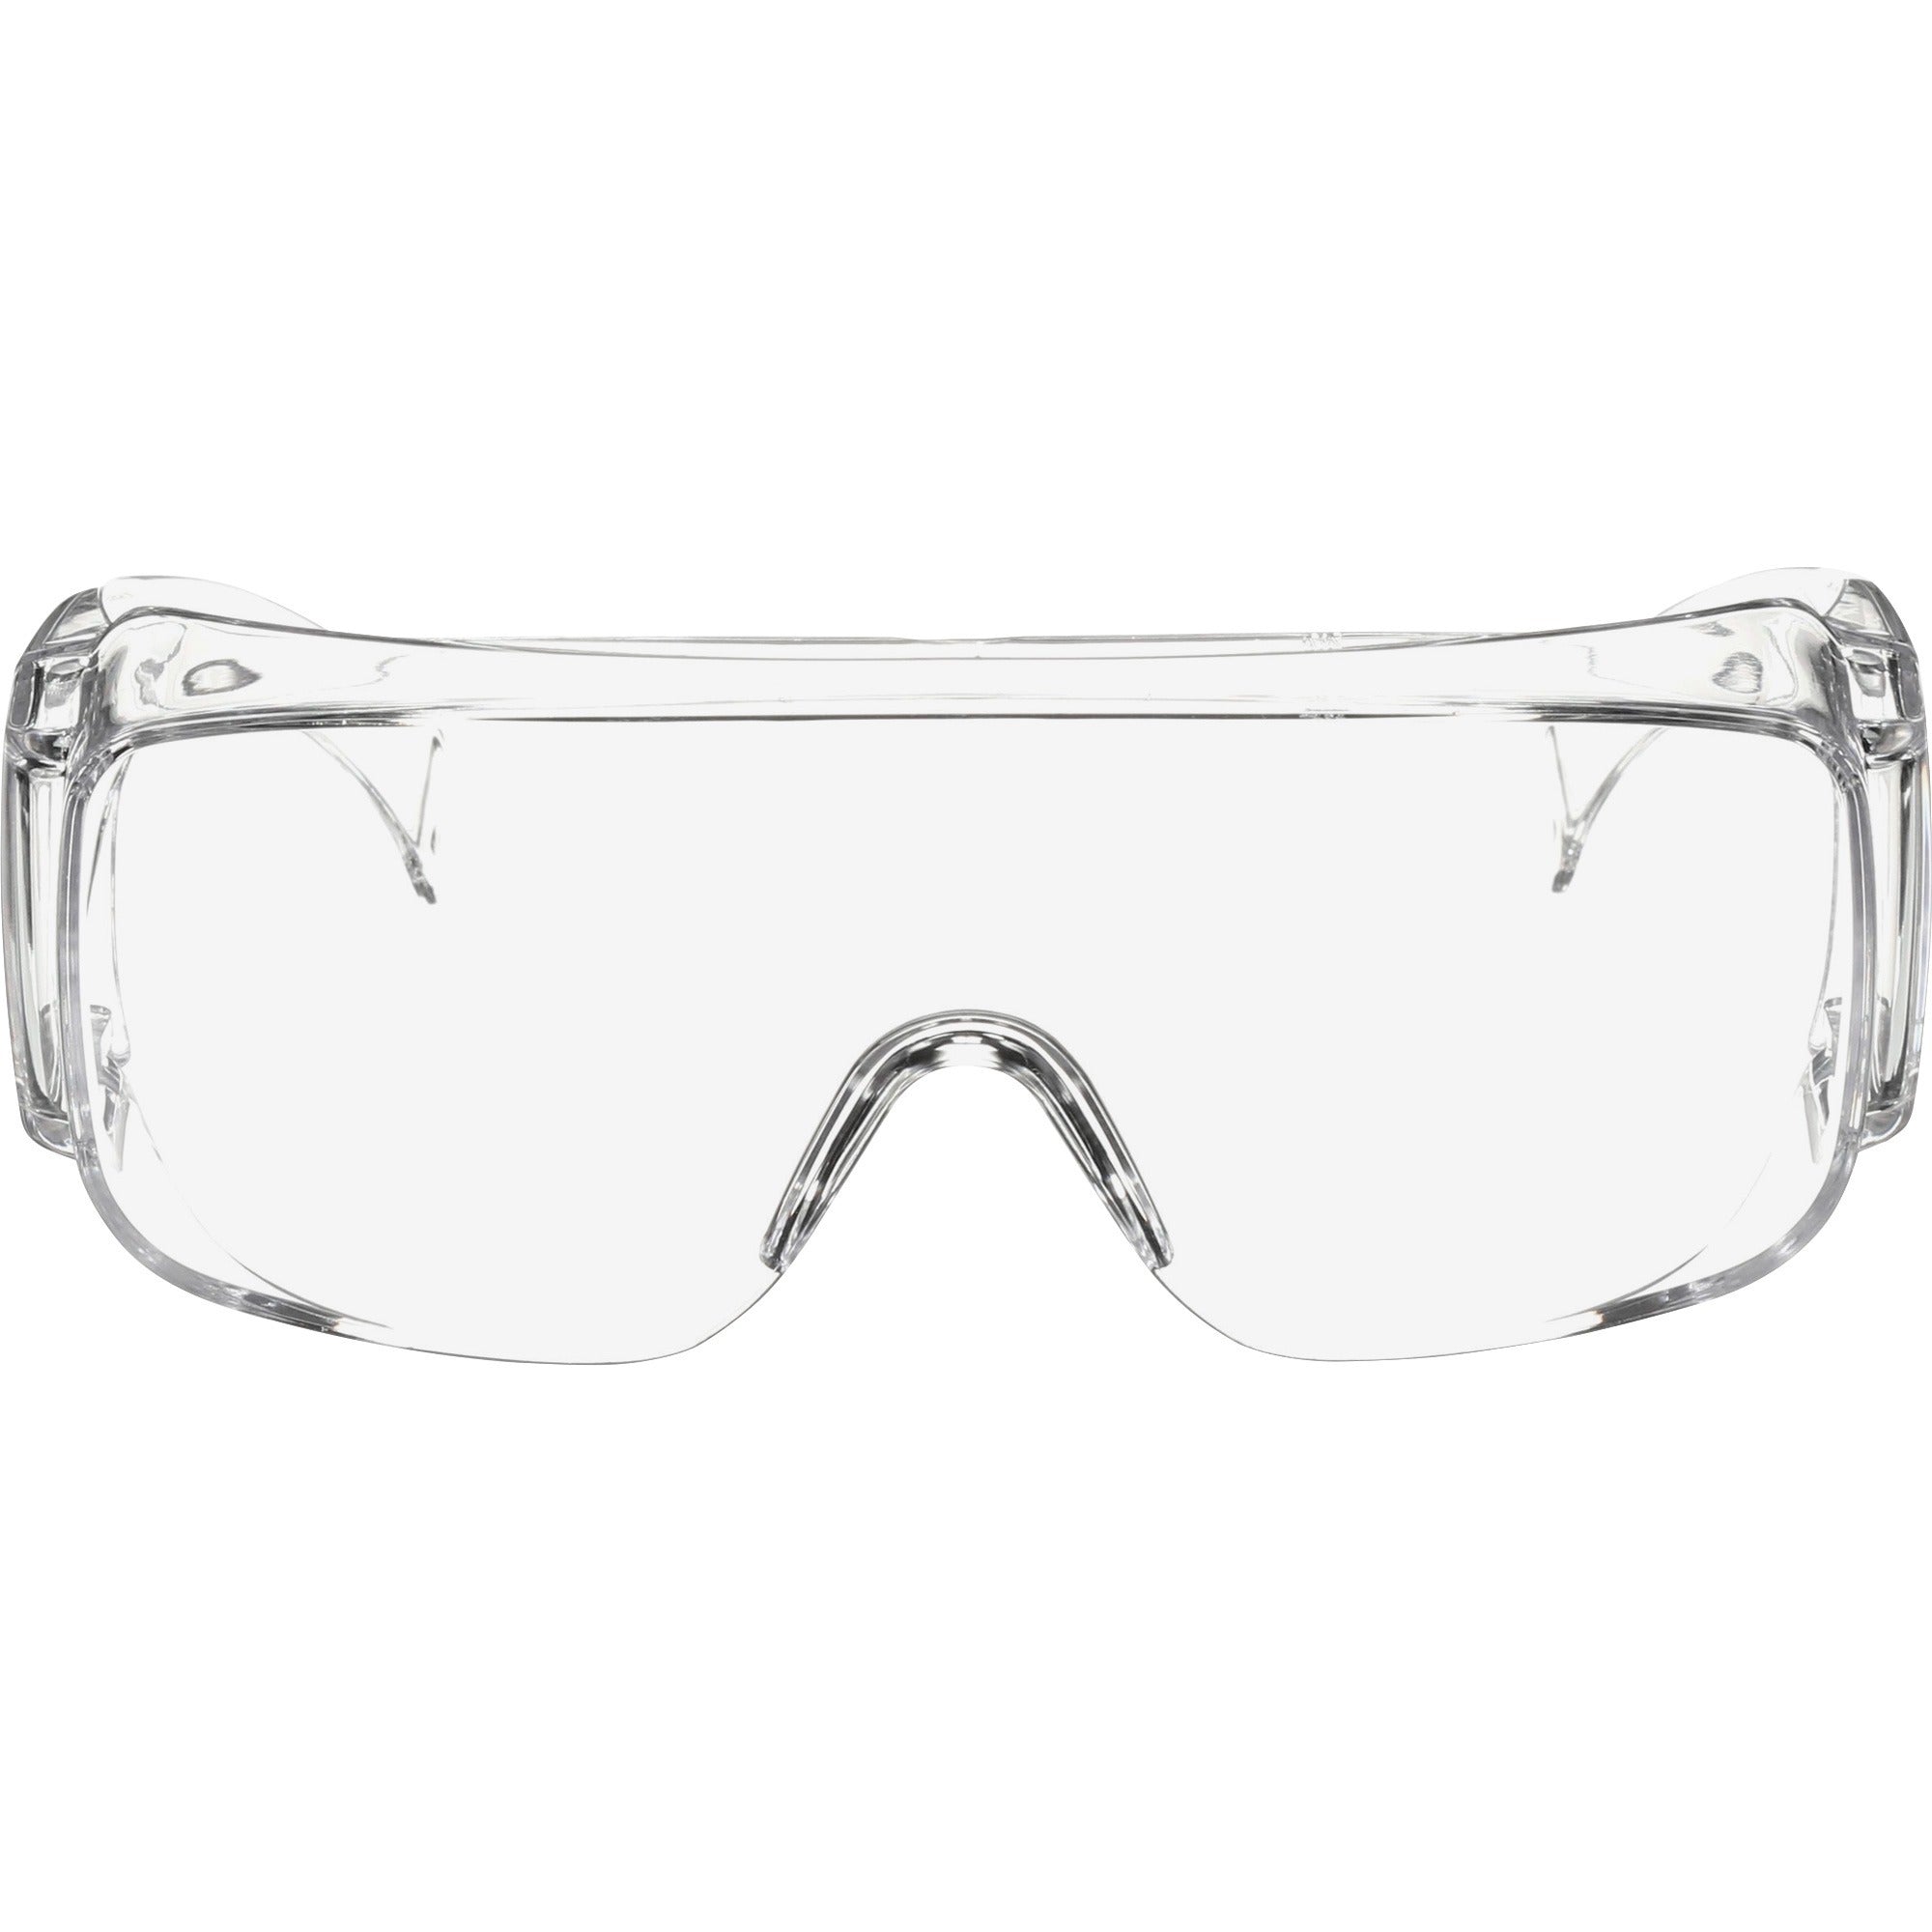 3m-tour-guard-v-protective-eyewear-medium-size-ultraviolet-protection-clear-lens-100-box_mmmtgv01100 - 2